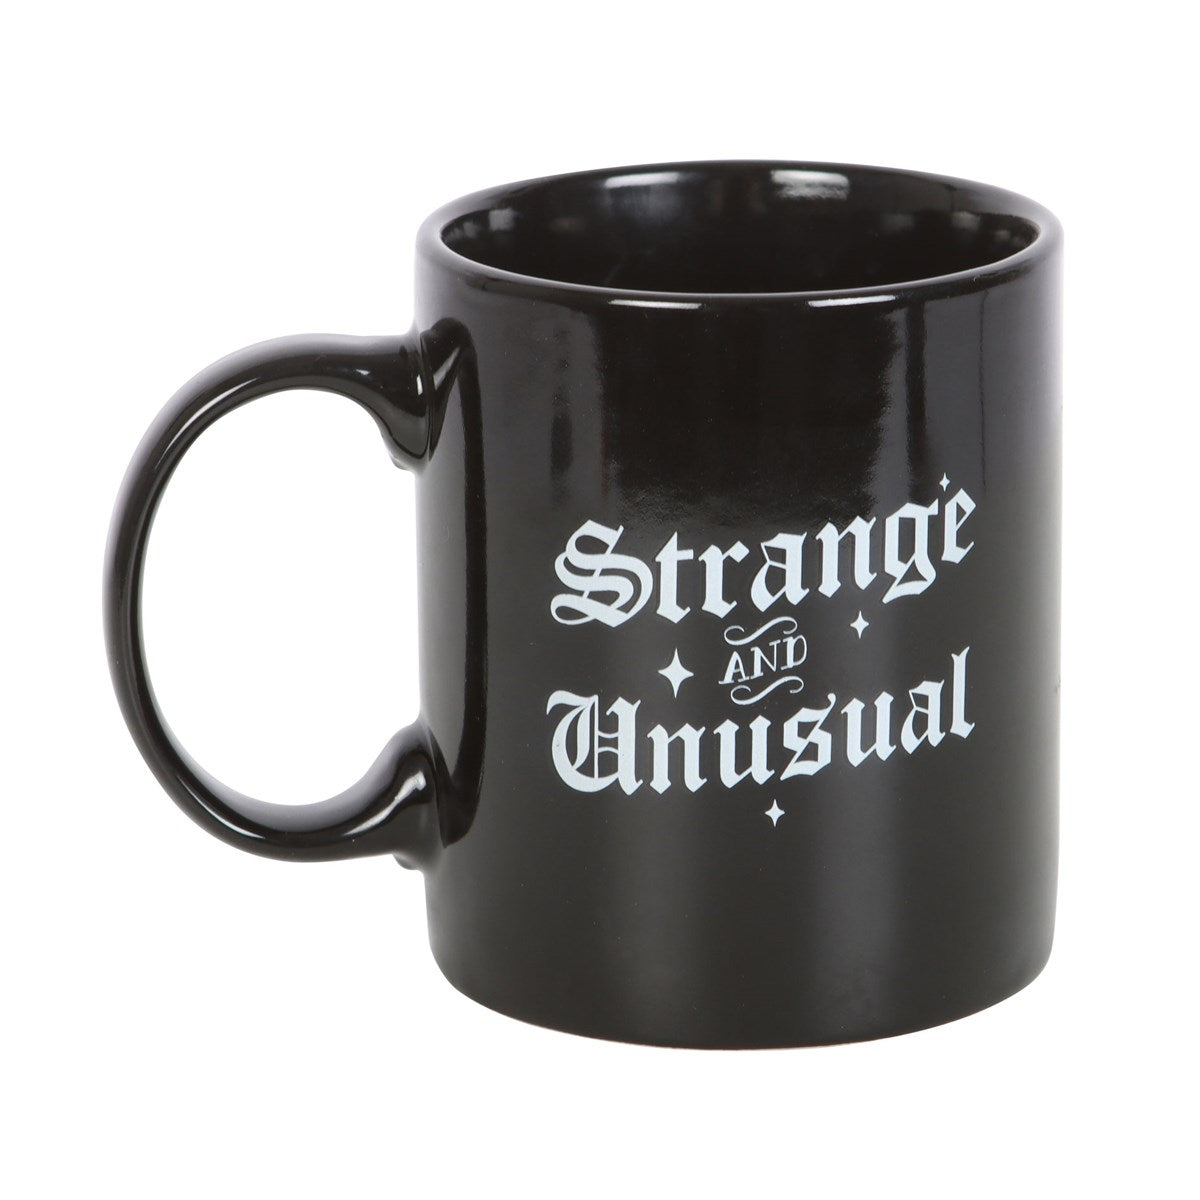 Strange and Unusual Mug NEW!